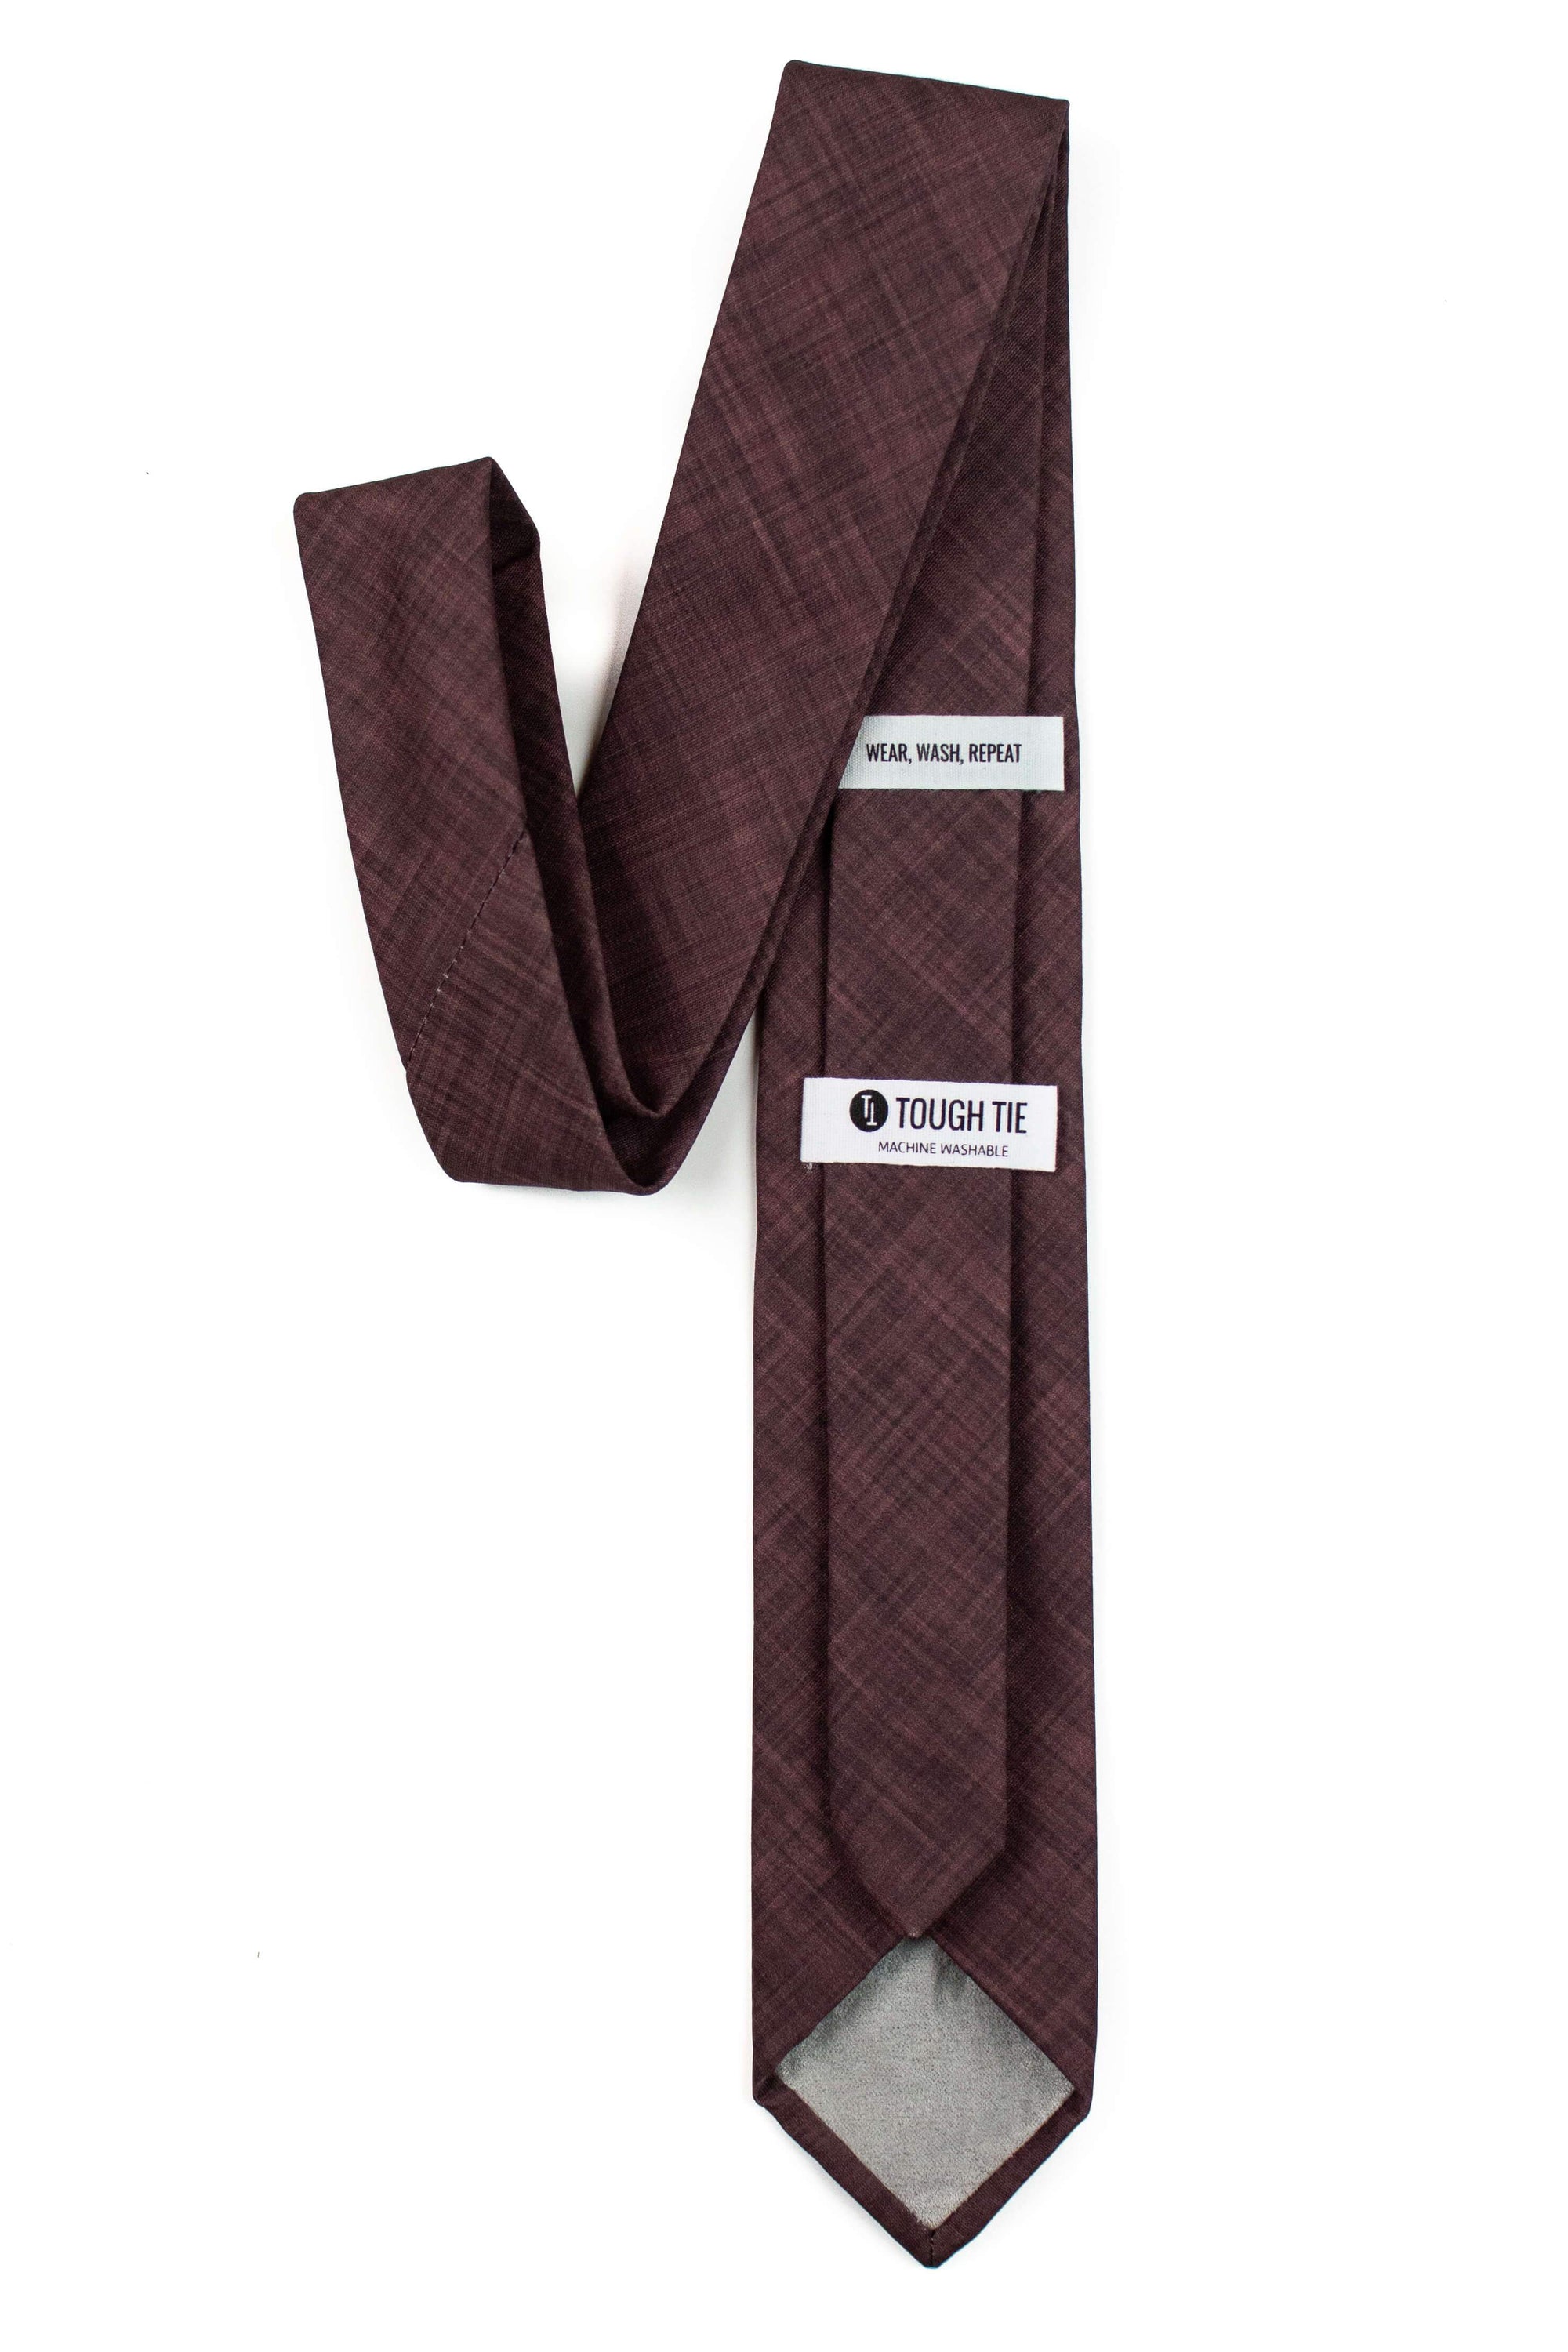 Tie, Unisex Burgundy, Velcro Adjustable